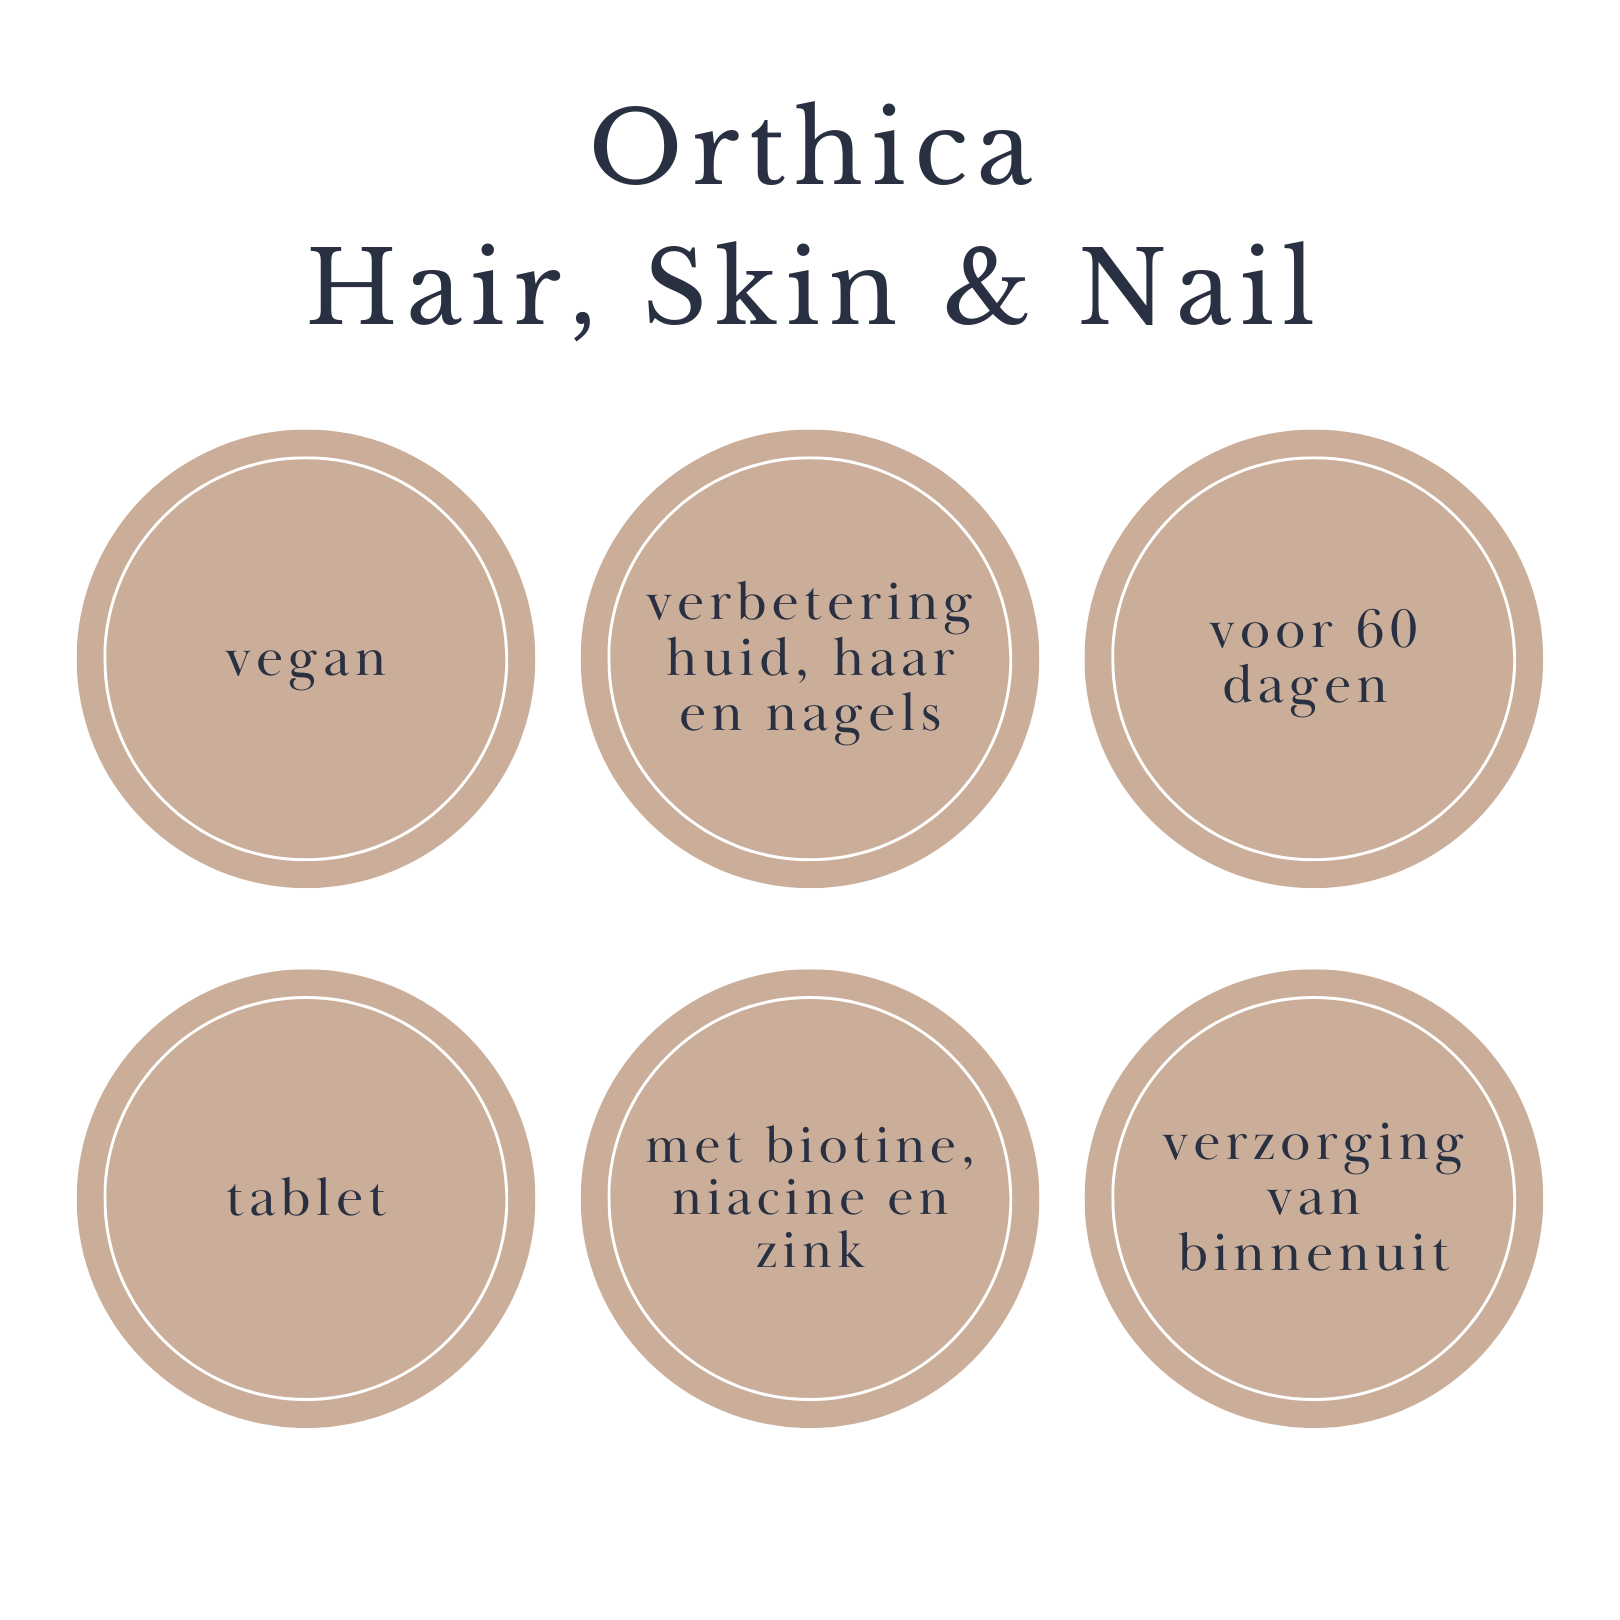 orthica hair skin nail